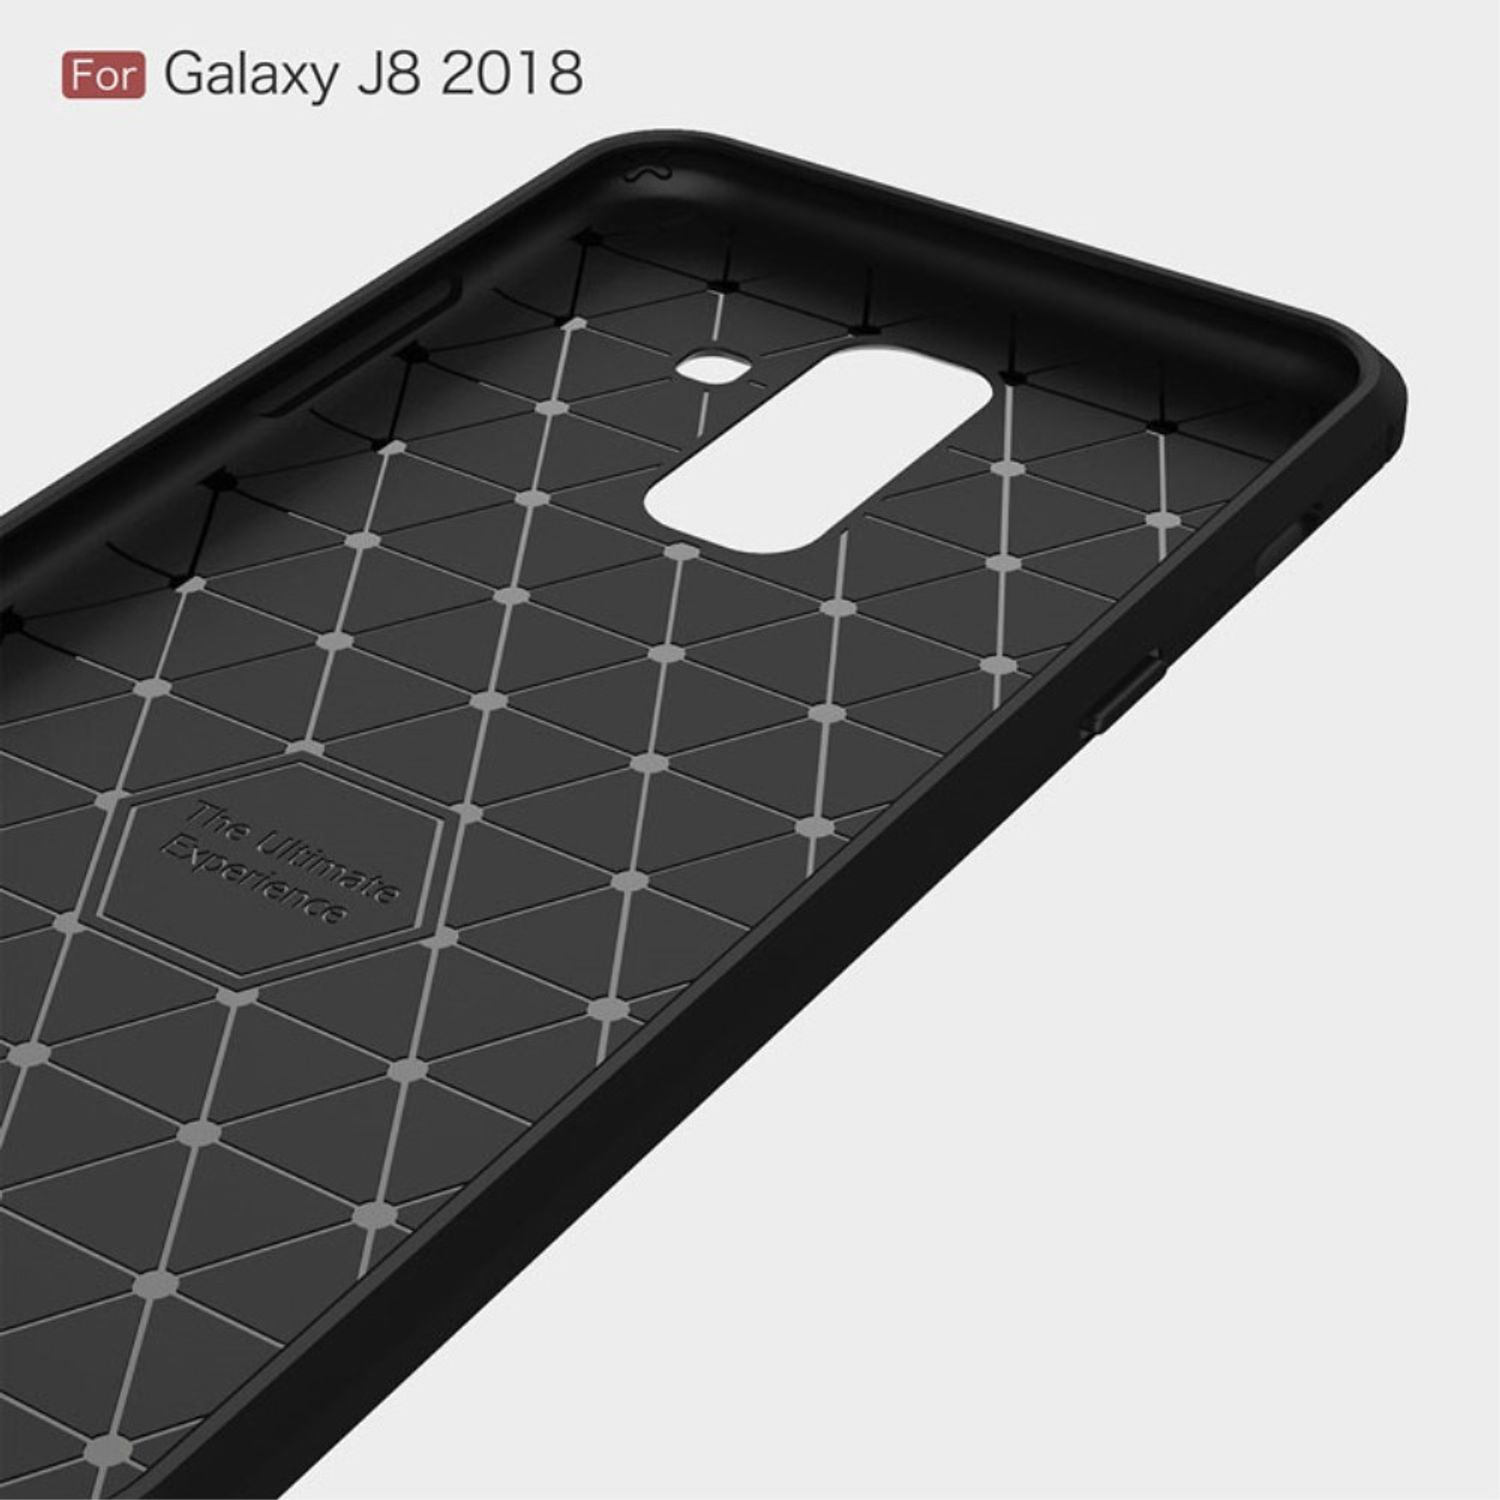 DESIGN (2018), Backcover, Handyhülle J8 Galaxy Samsung, Optik, Carbon Schwarz KÖNIG